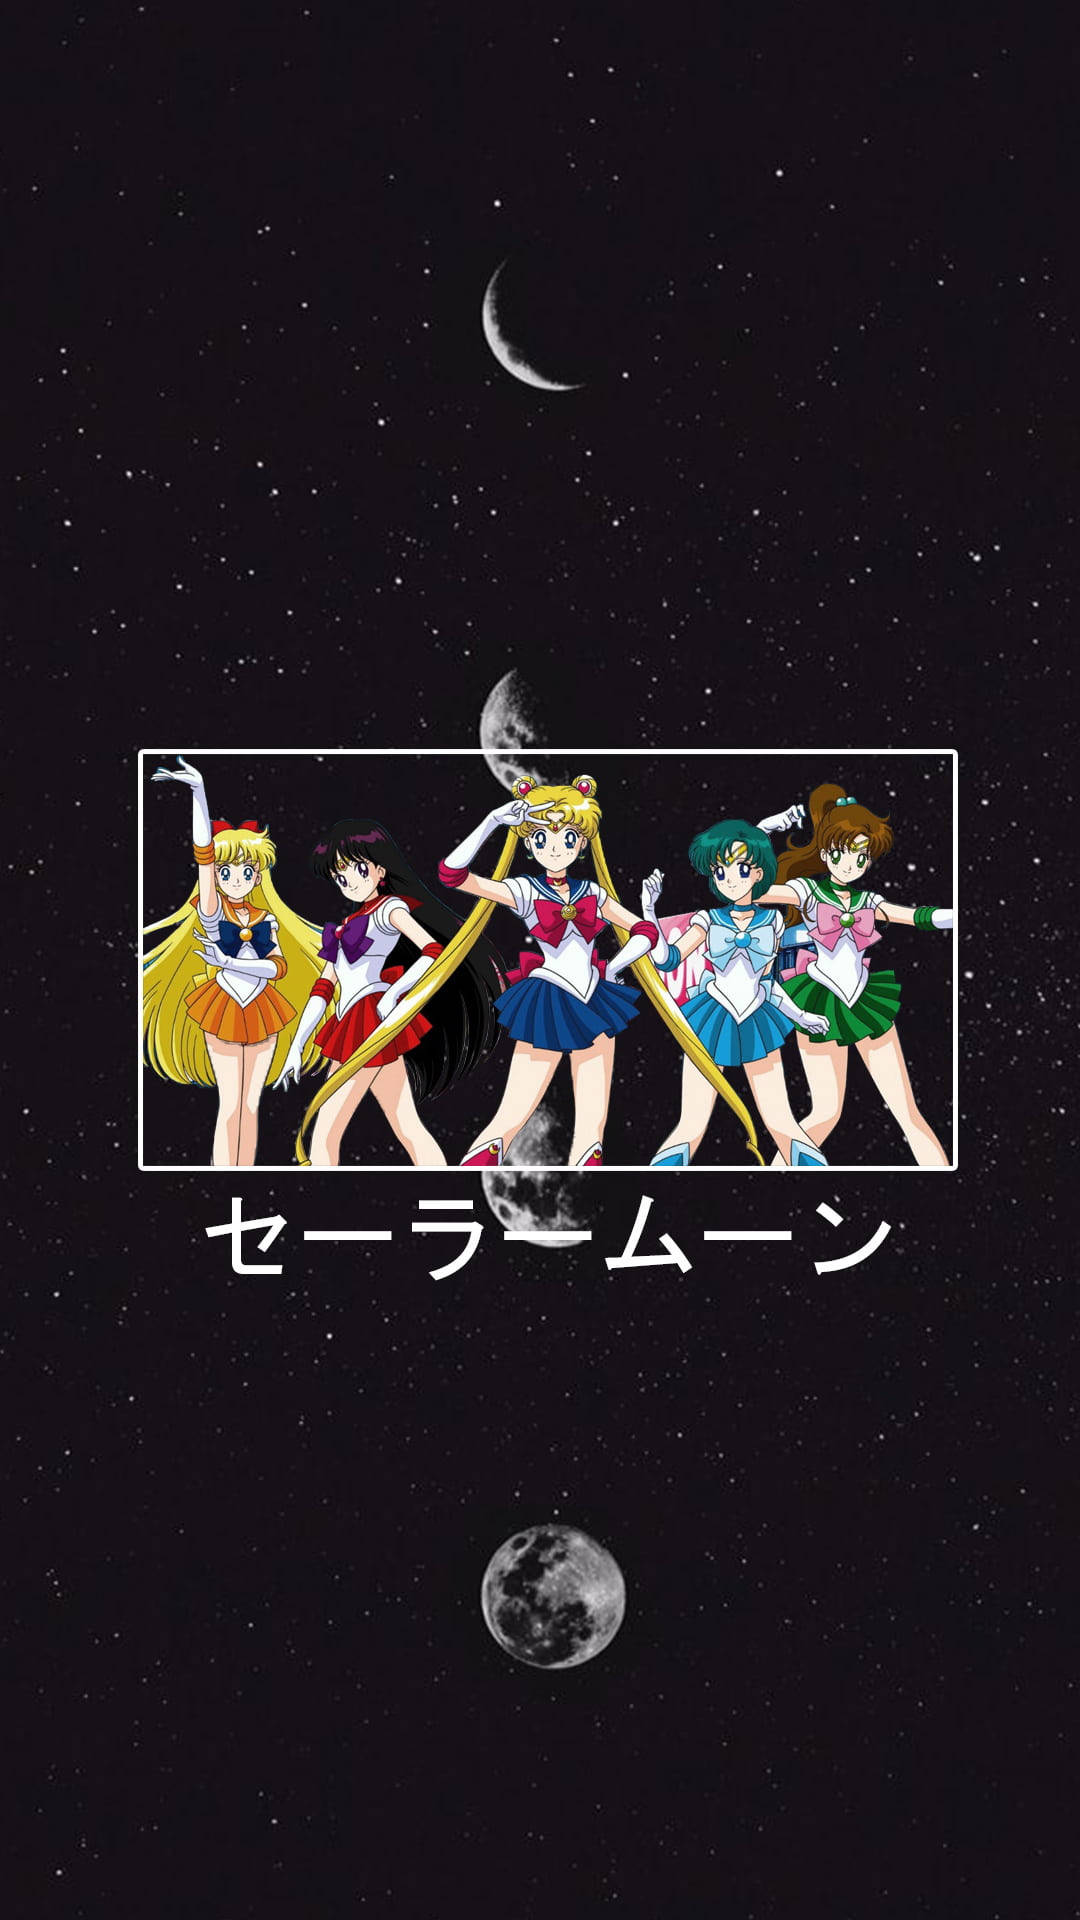 Sailor Moon Aesthetic Anime Girl Iphone